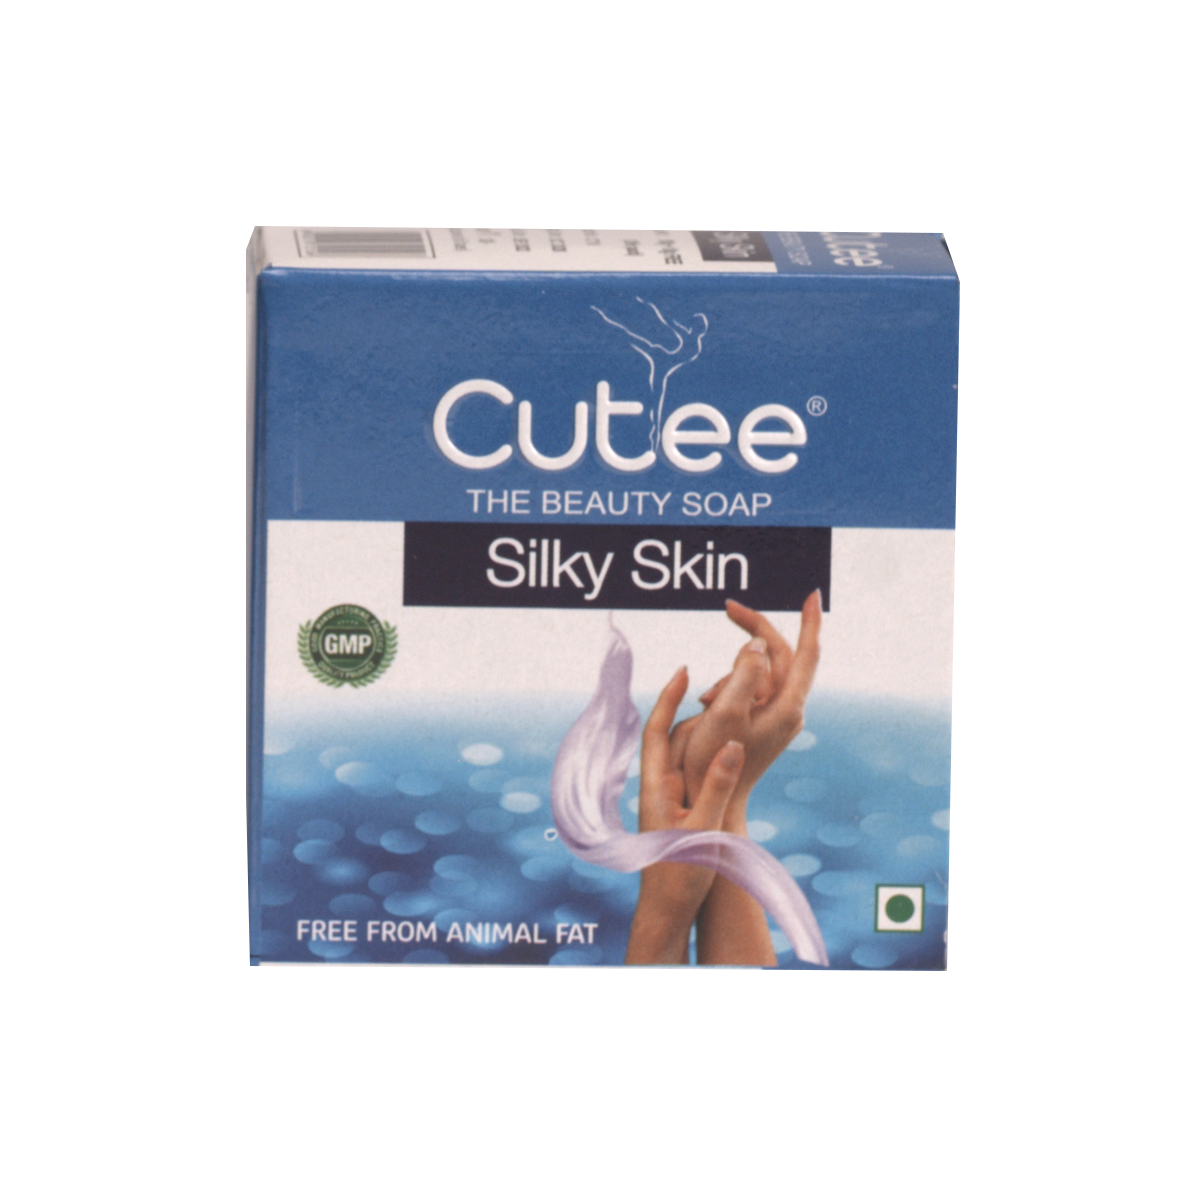 Cutee Silky Skin Soap